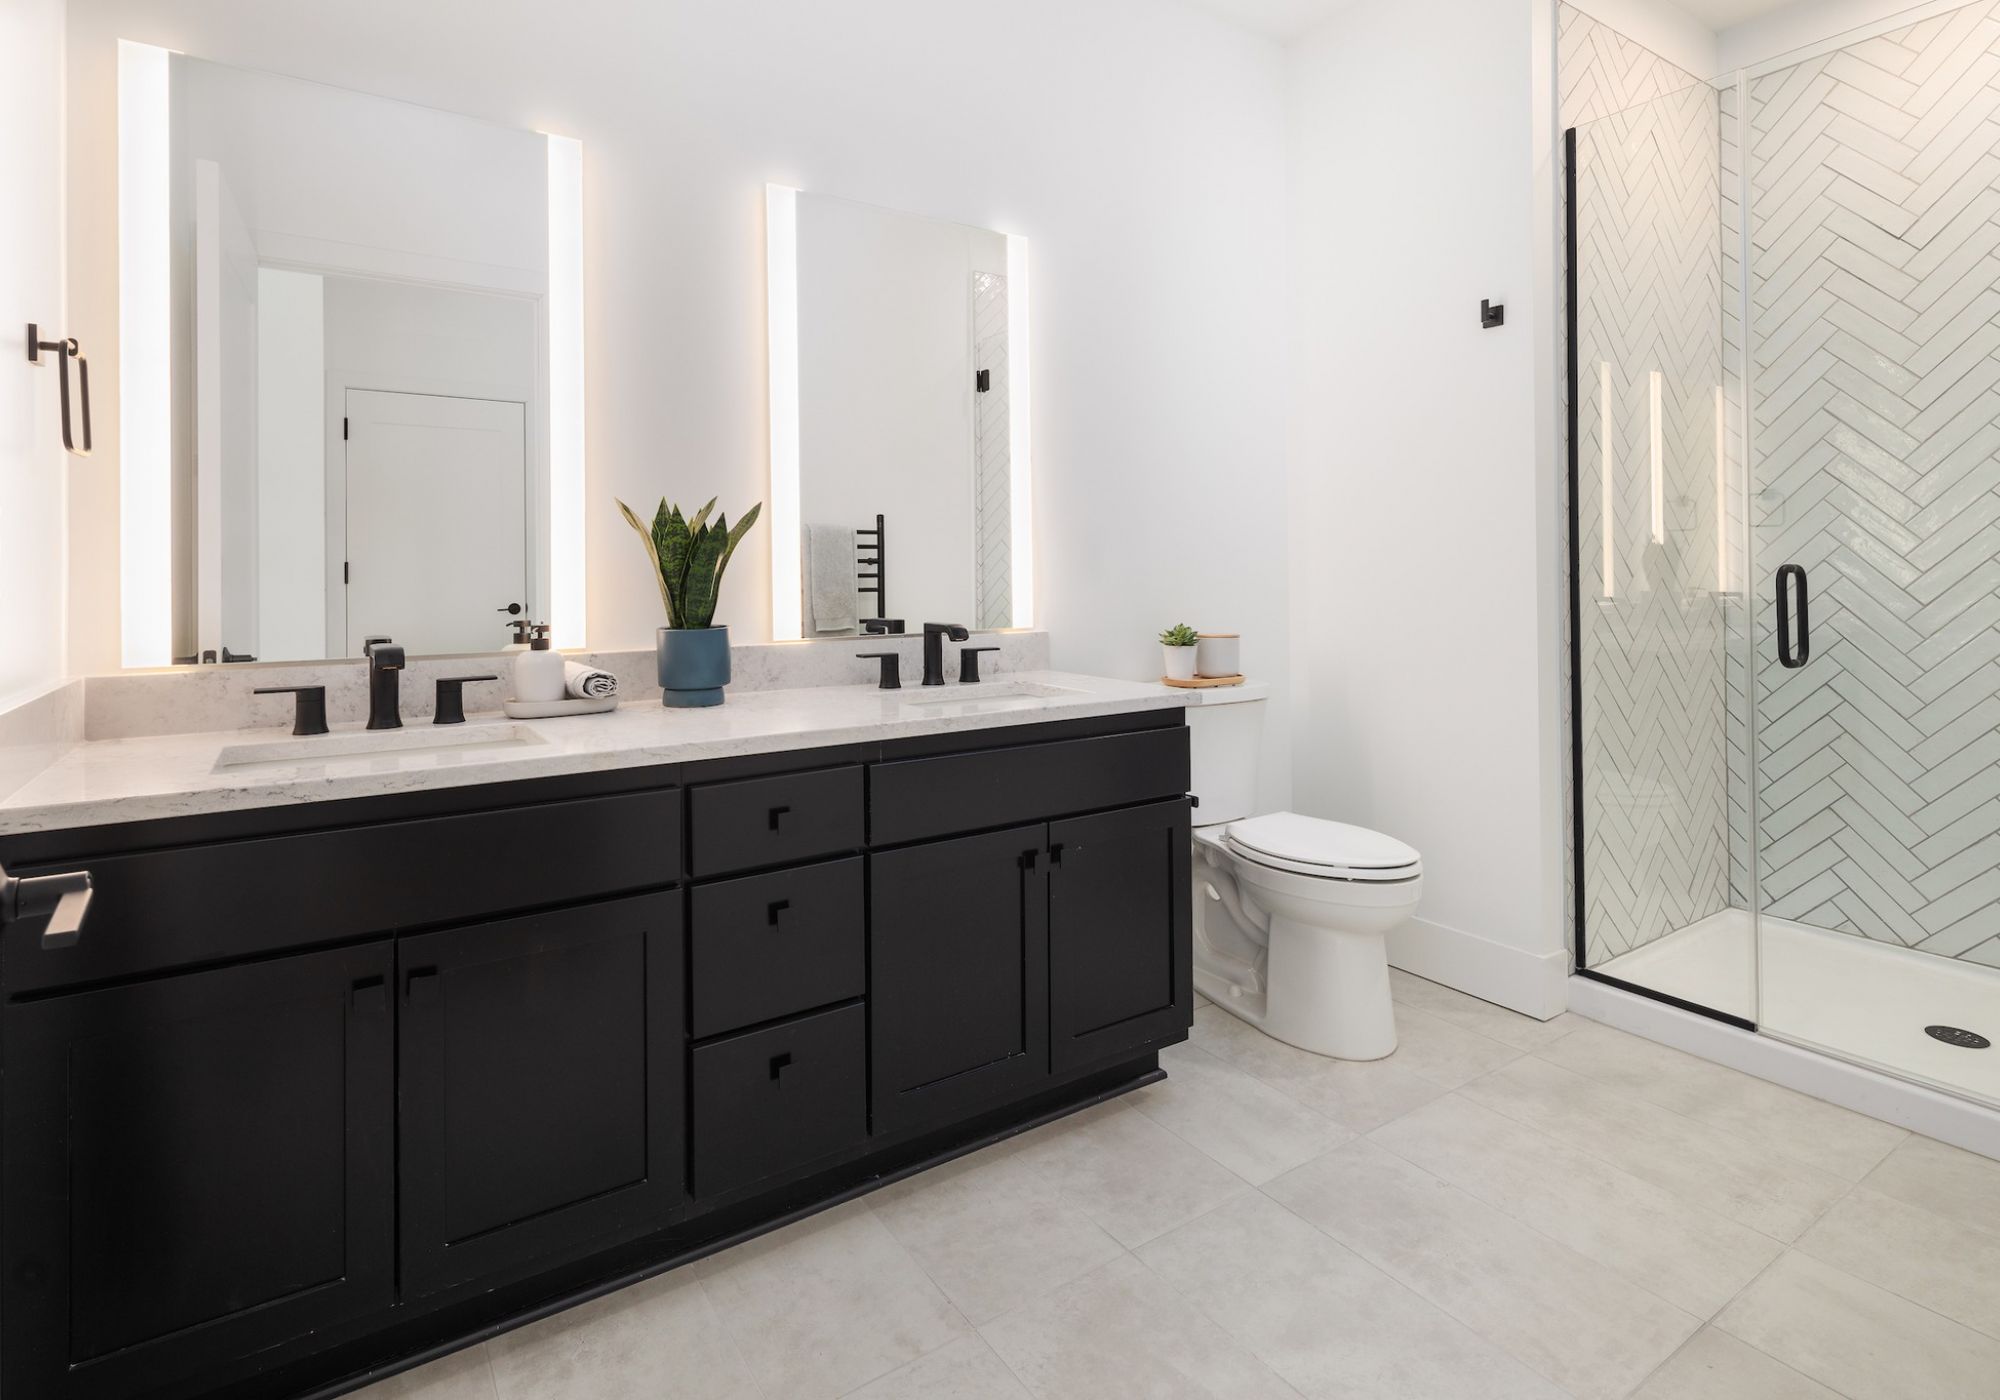 Moment apartments penthouse bathroom with porcelain tile, glass shower, double vanities, and quartz countertops